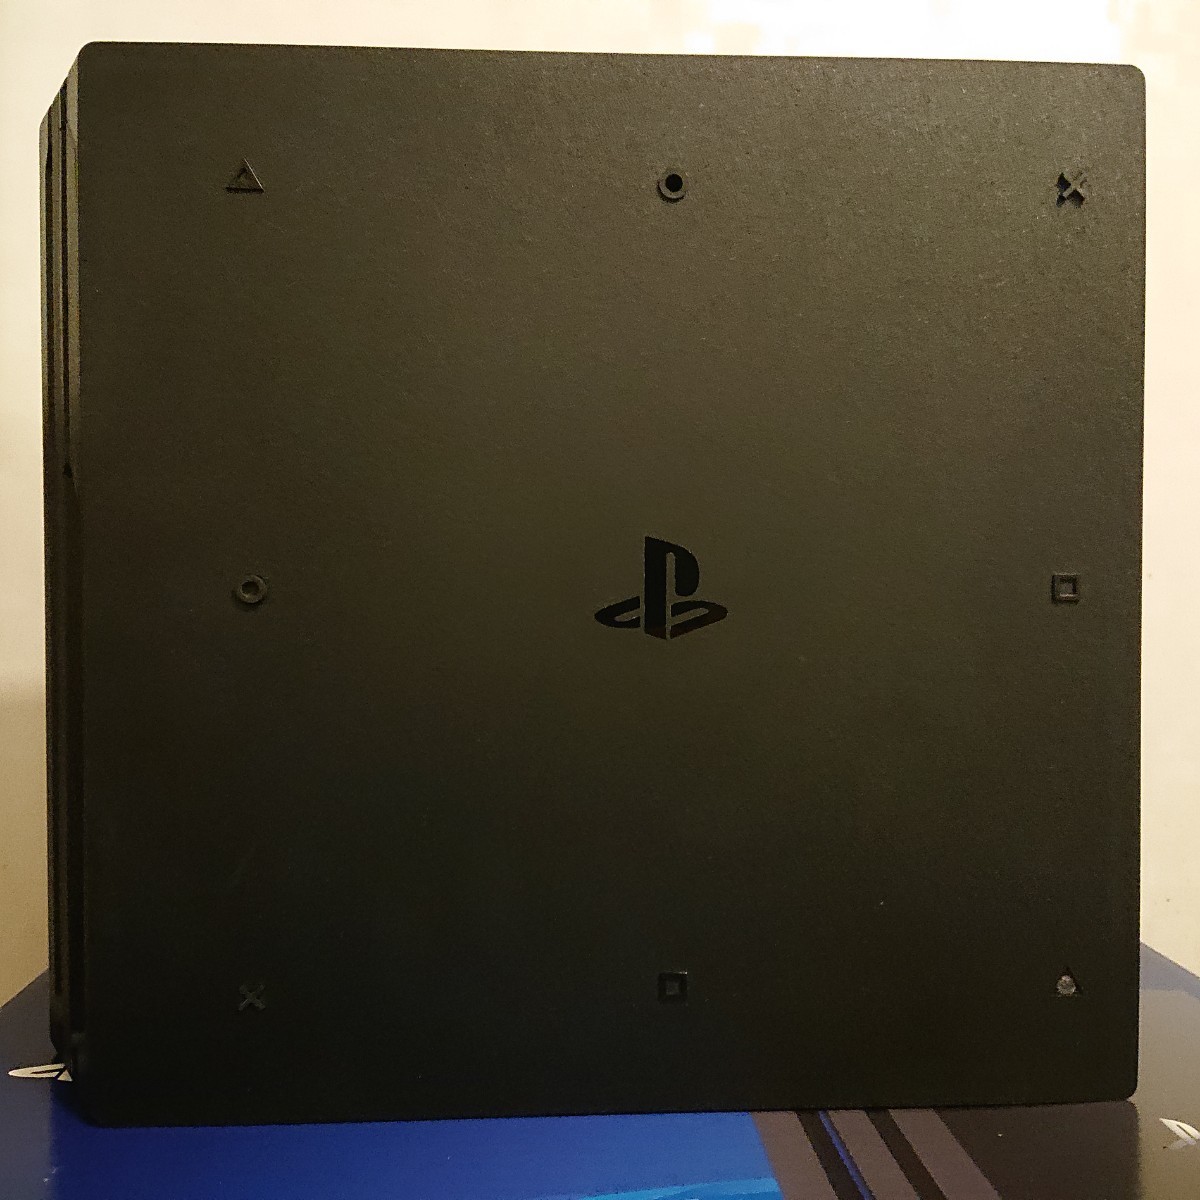 PlayStation 4 pro CUH-7200B